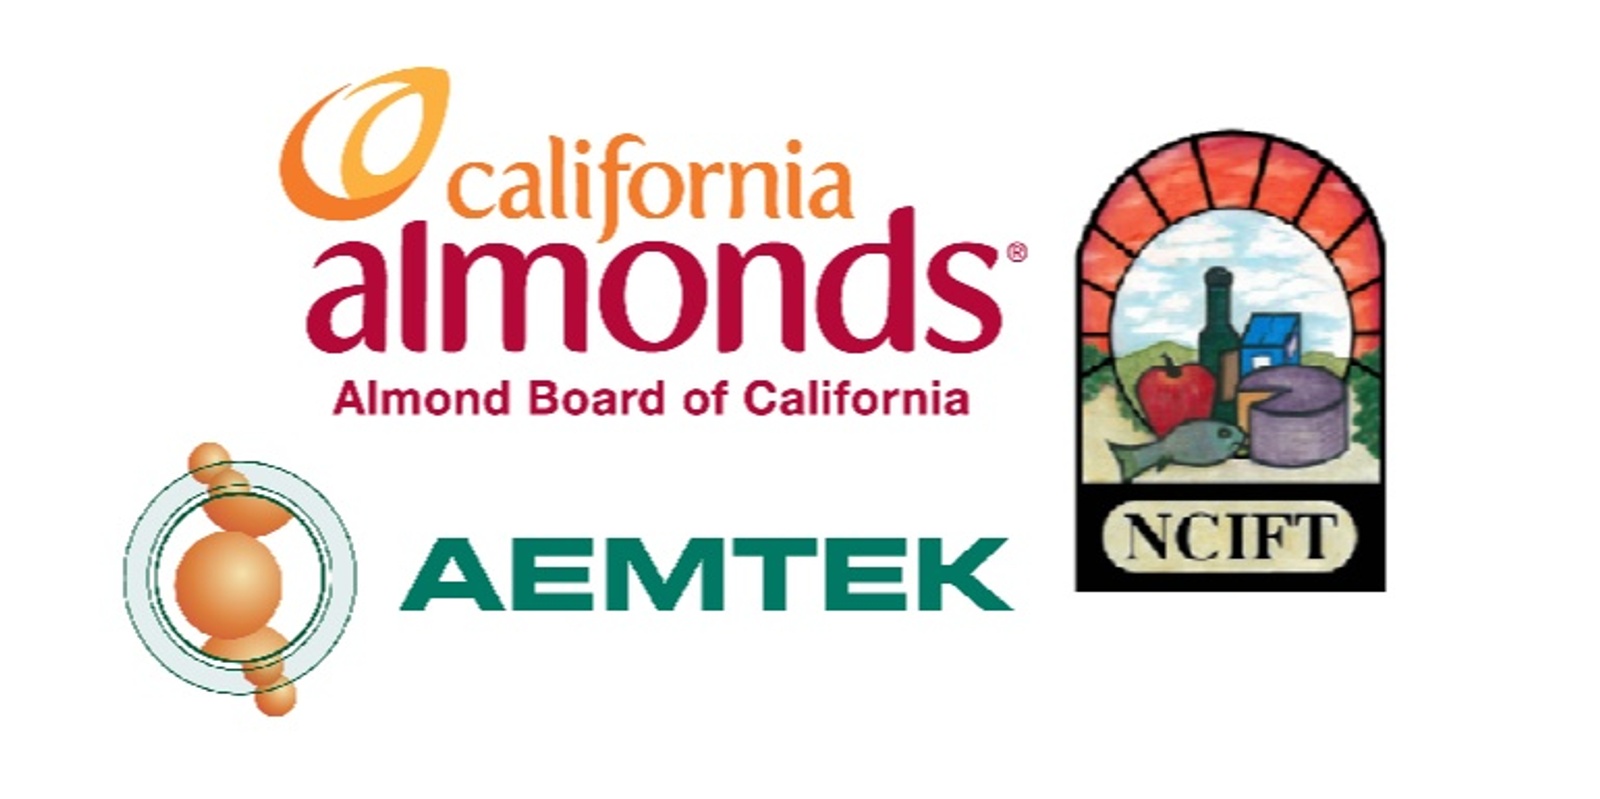 Knowledge & Network | NCIFT @ AEMTEK featuring California Almond Board